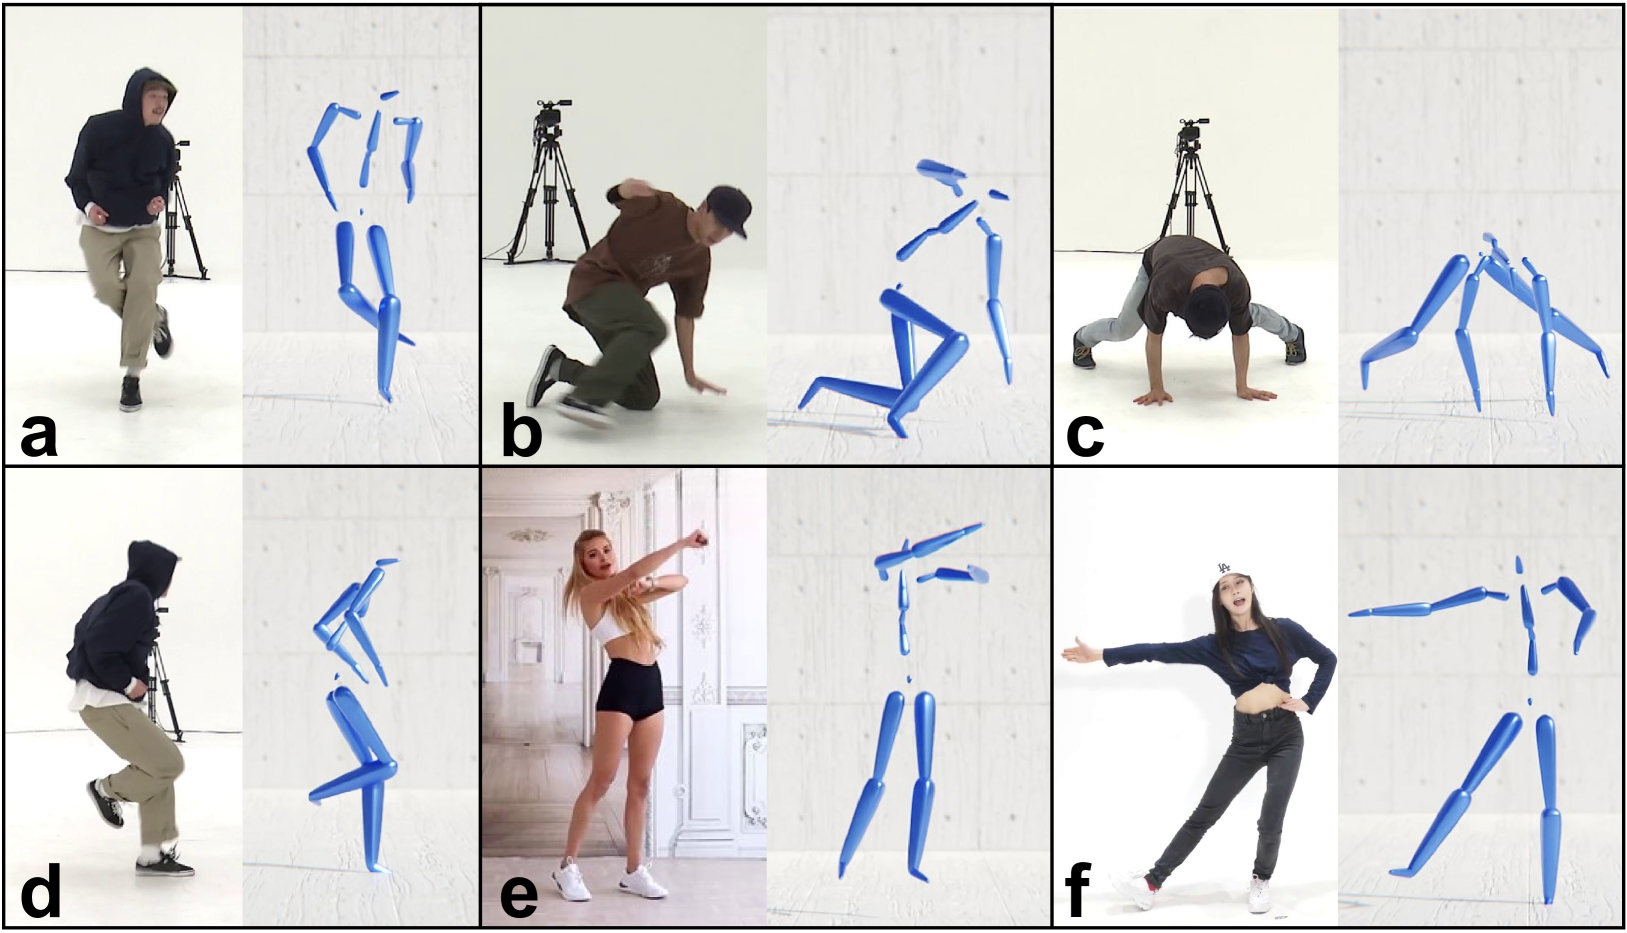 Learning Human Motion from Monocular Videos via Cross-Modal Manifold Alignment